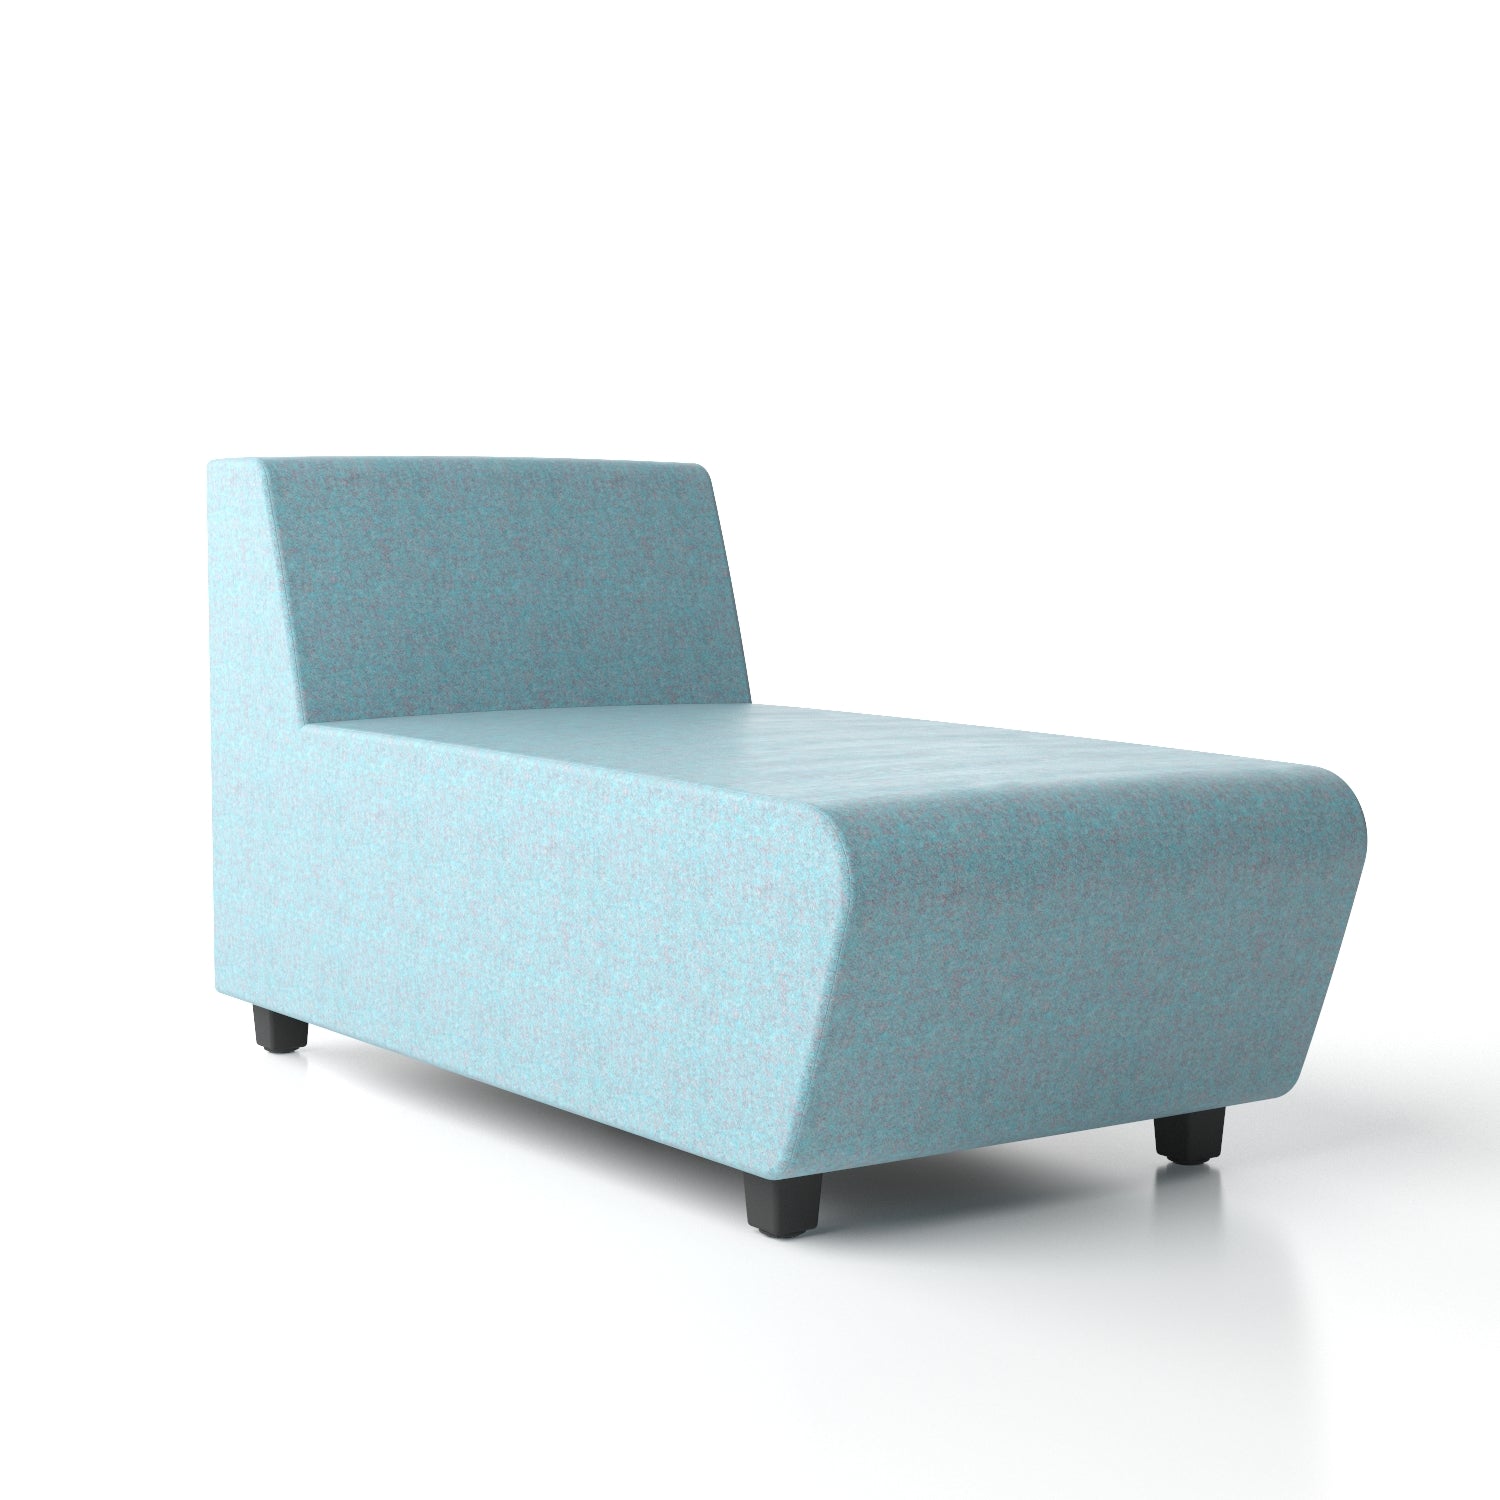 Lounge Sessel Schule ideal für moderne Sitzgruppen